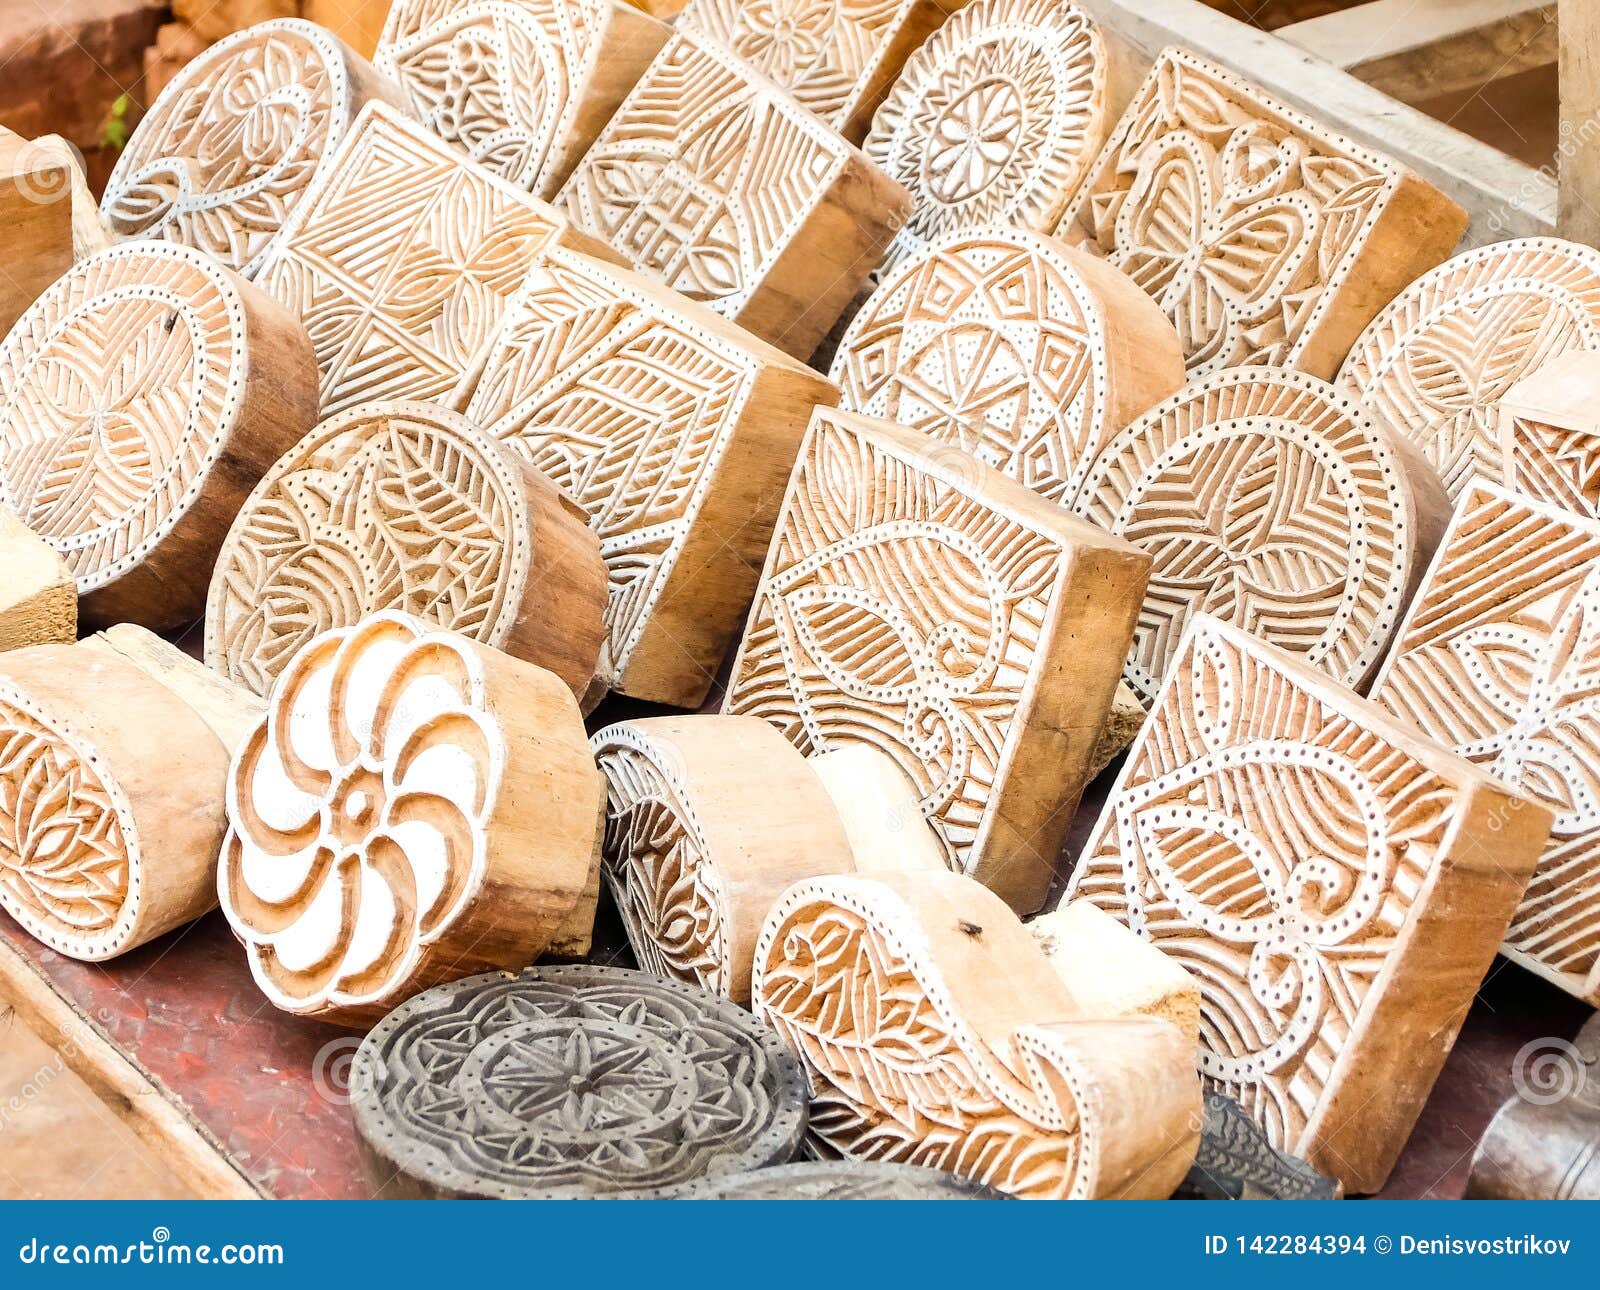 impresión textil Sellos de impresión regalo para niños Henna MehandiPrinting Set de 10 diseño de Mughal bloques de madera tallados a mano para hacer bordes de sarre artesanía de cerámica 